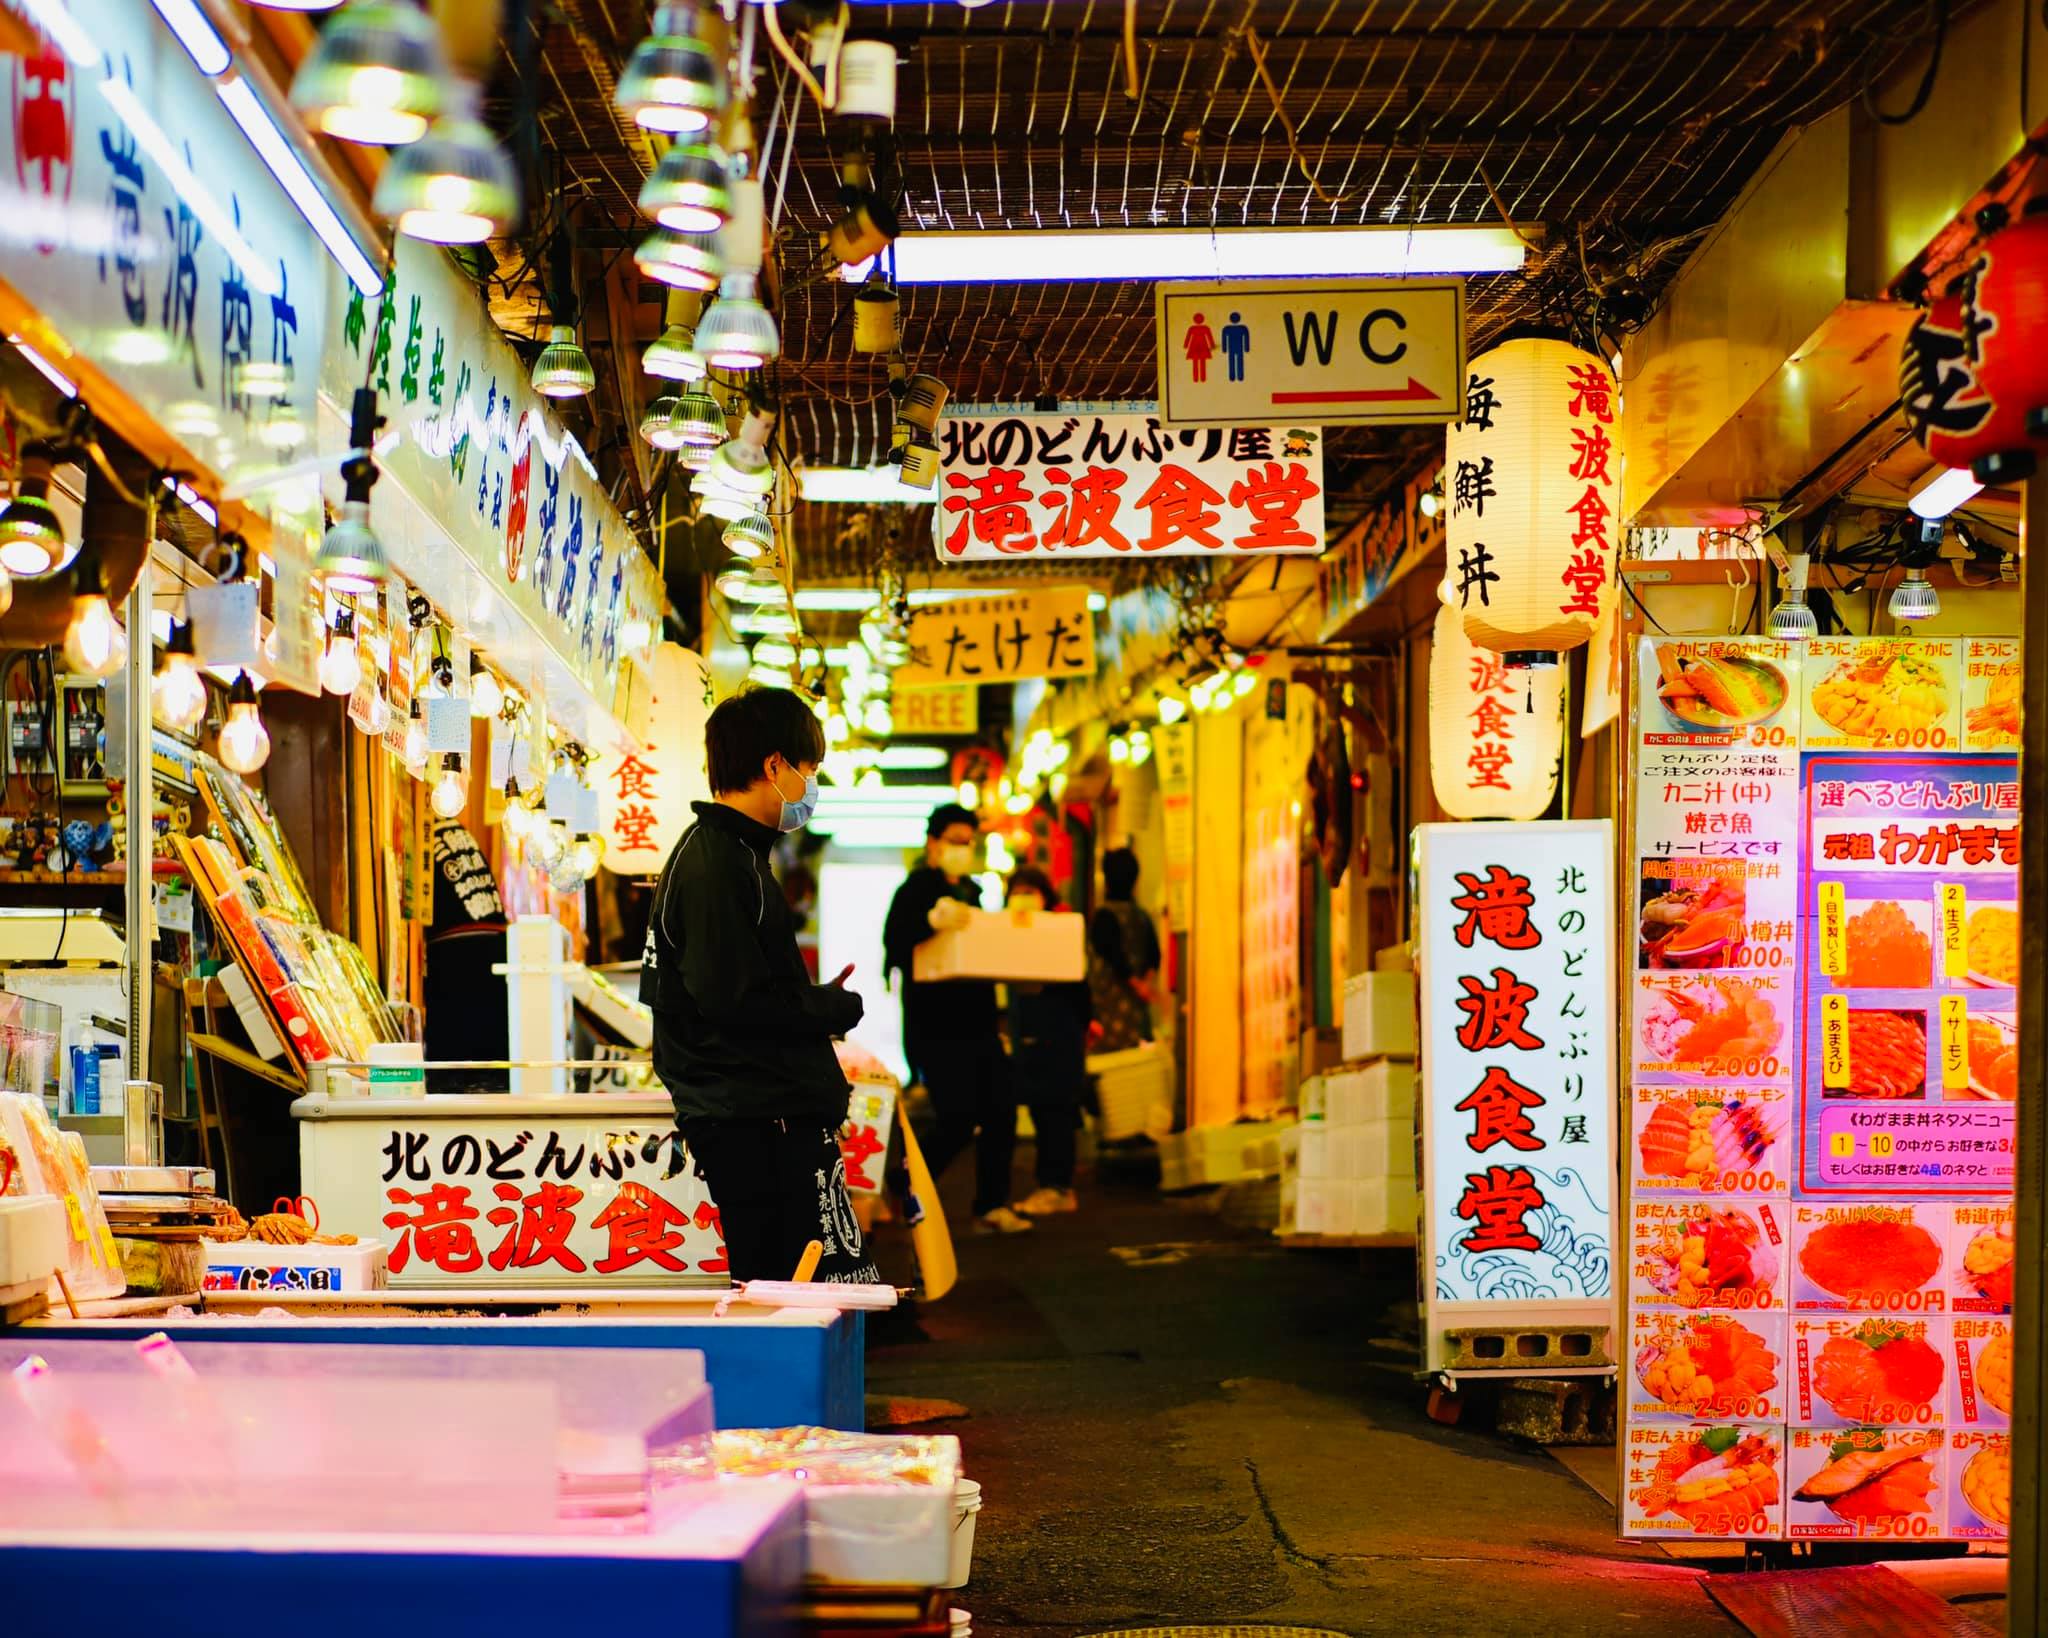 Otaru Triangle Market: A Bustling Fish Market